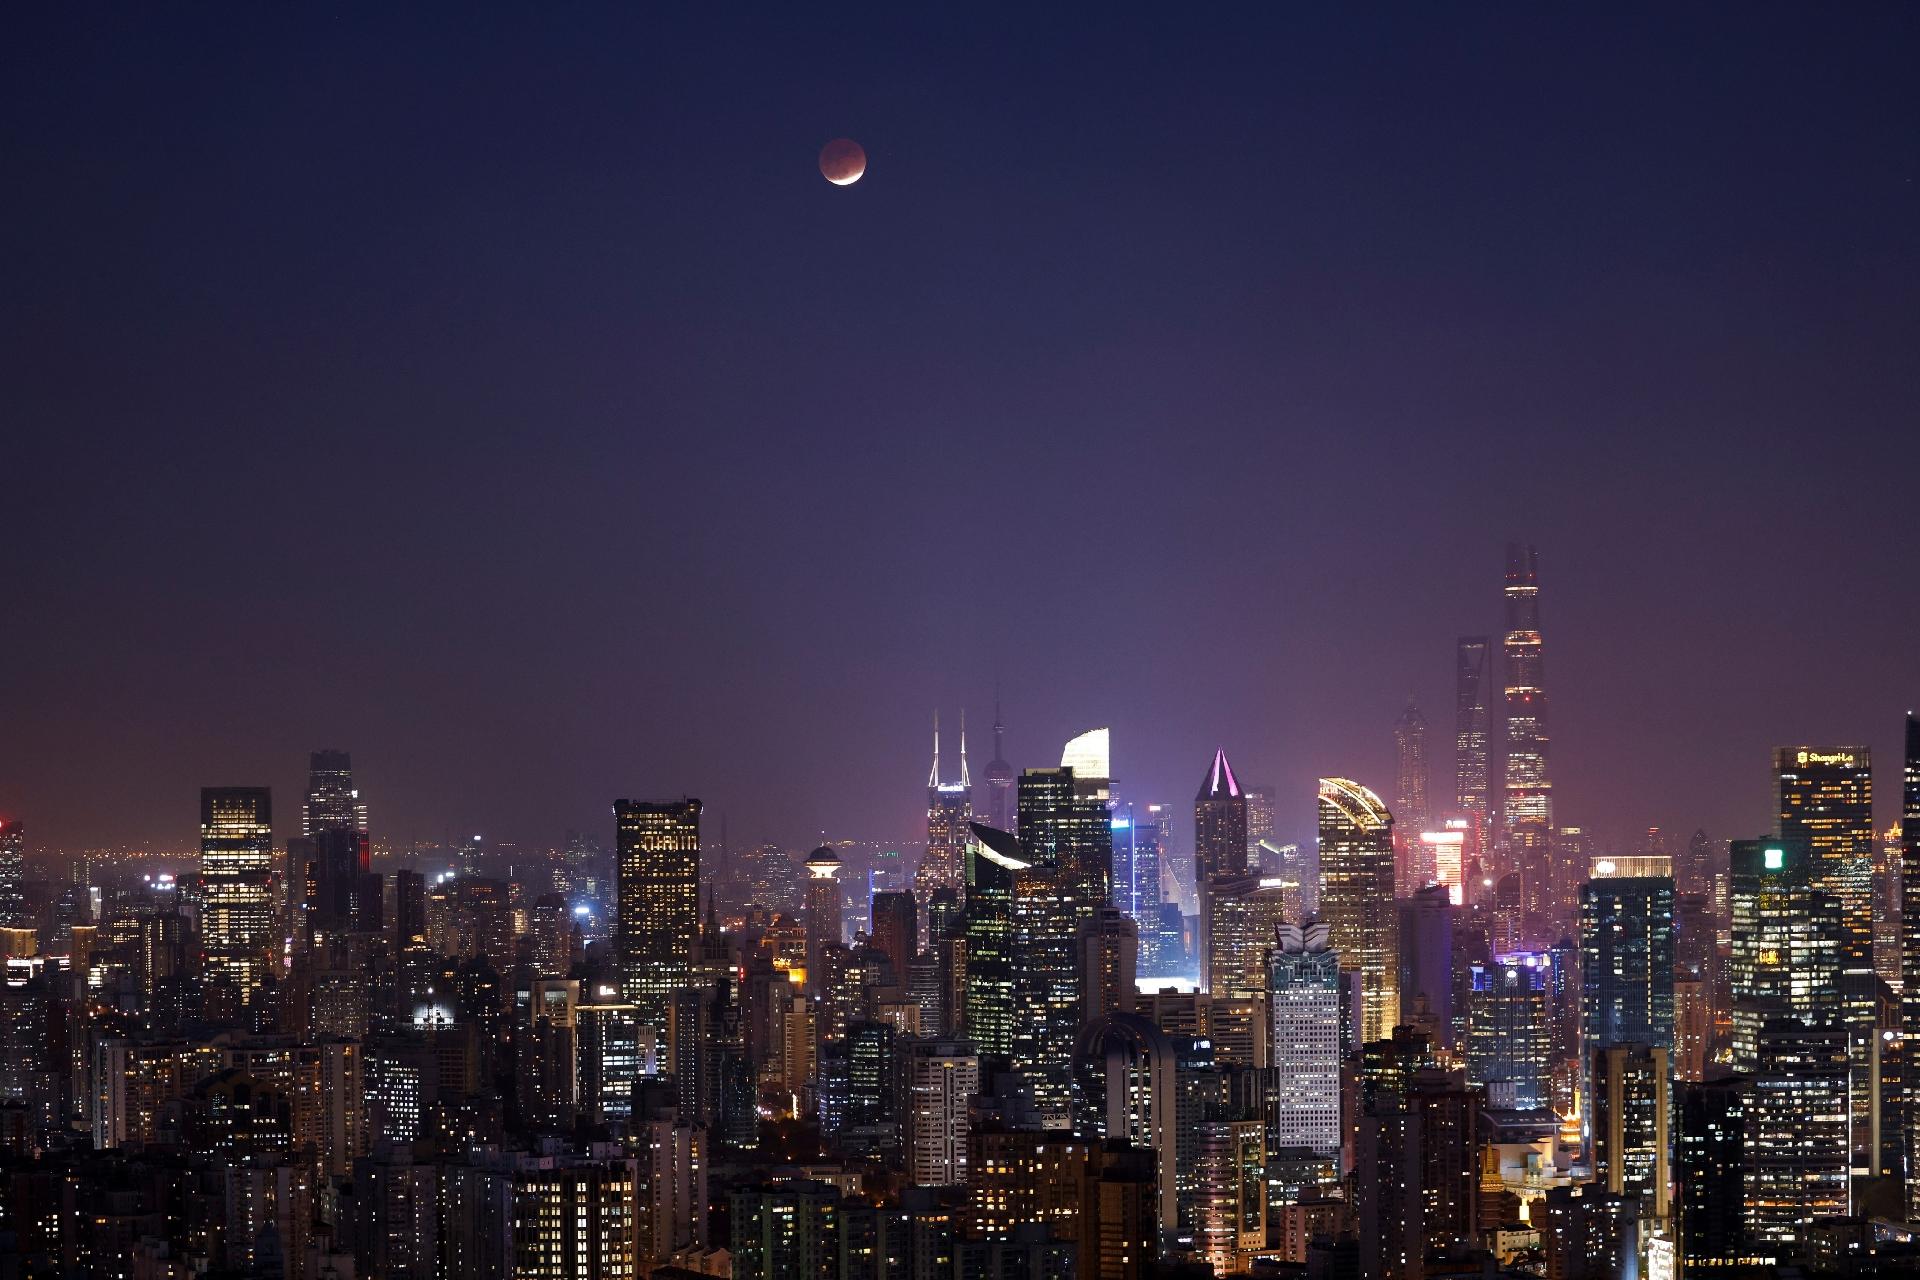 Eclipse lunar no horizonte de Xangai (China) - Ali Song / Reuters